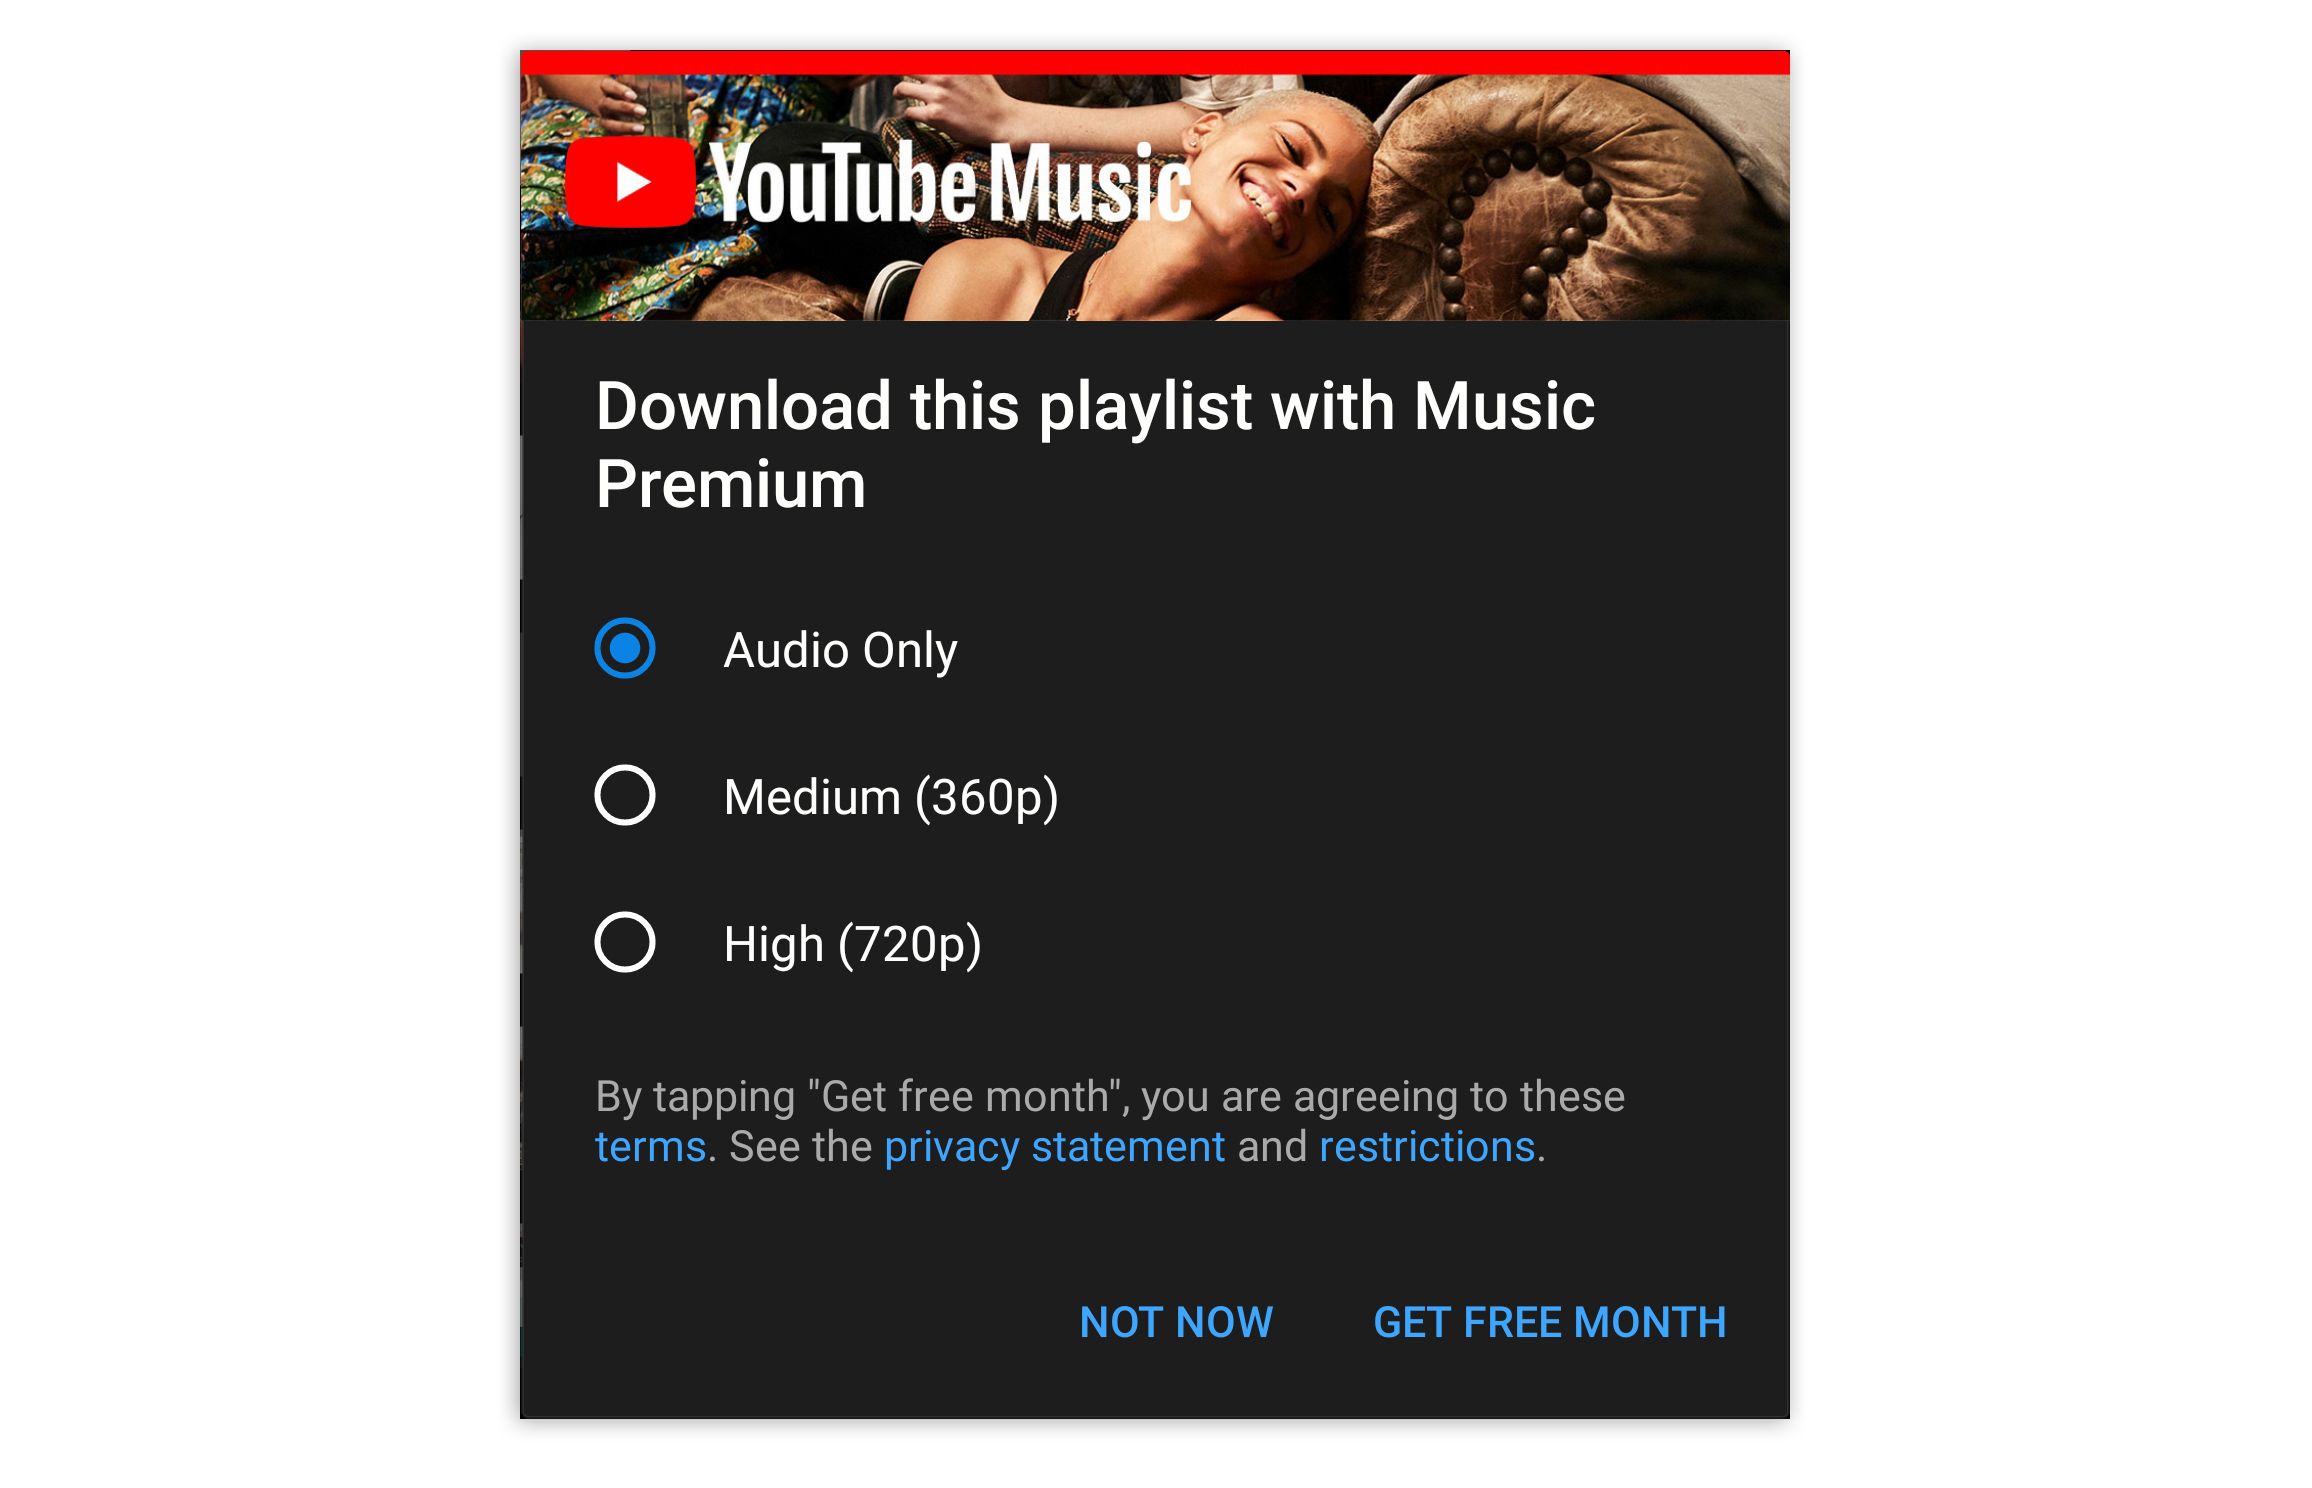 youtube music downloads